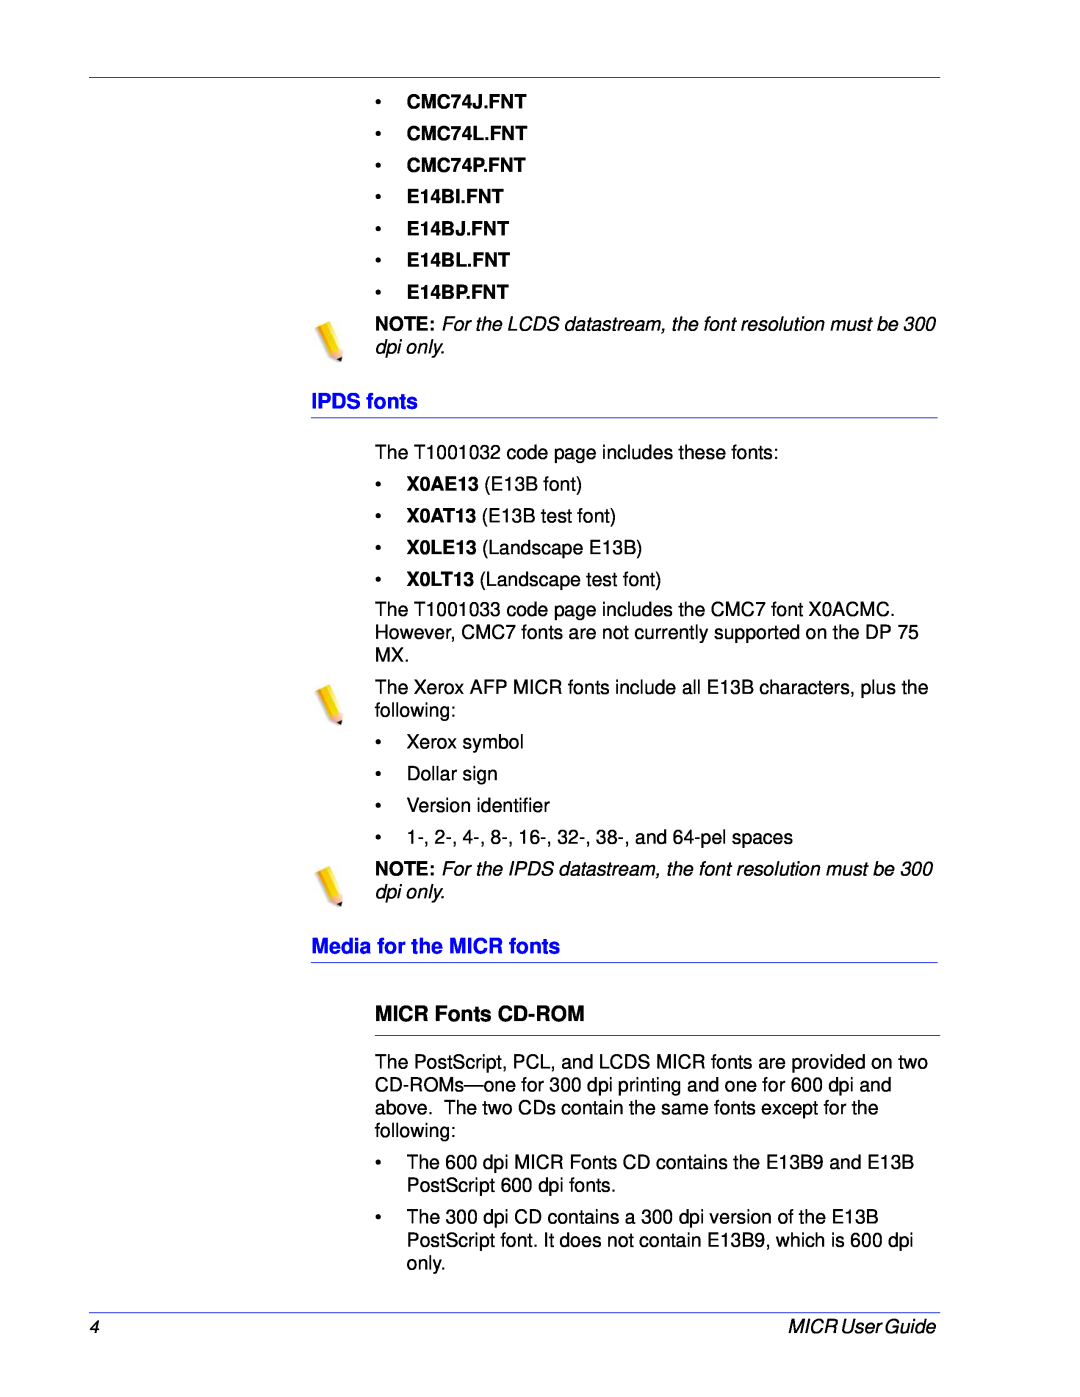 Xerox 701P47409 manual IPDS fonts, Media for the MICR fonts, MICR Fonts CD-ROM, CMC74J.FNT CMC74L.FNT CMC74P.FNT E14BI.FNT 